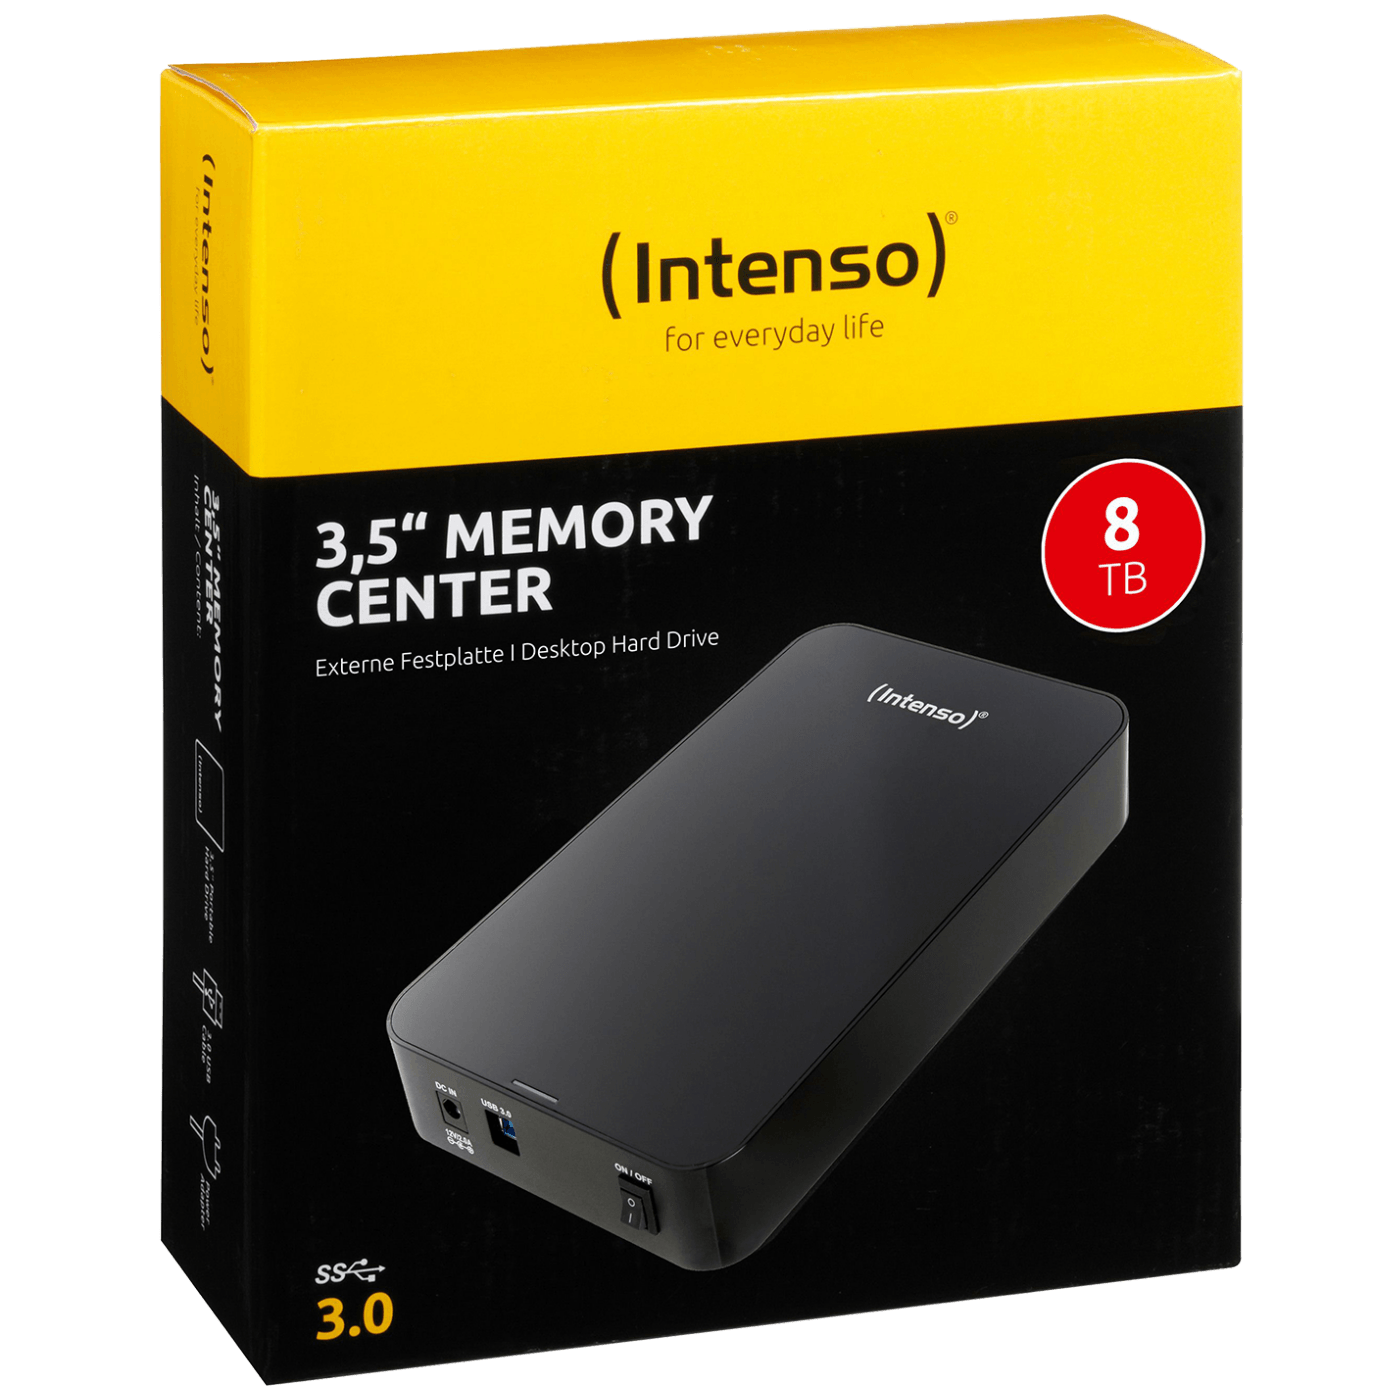 HDD3.0-8TB/Memory-center